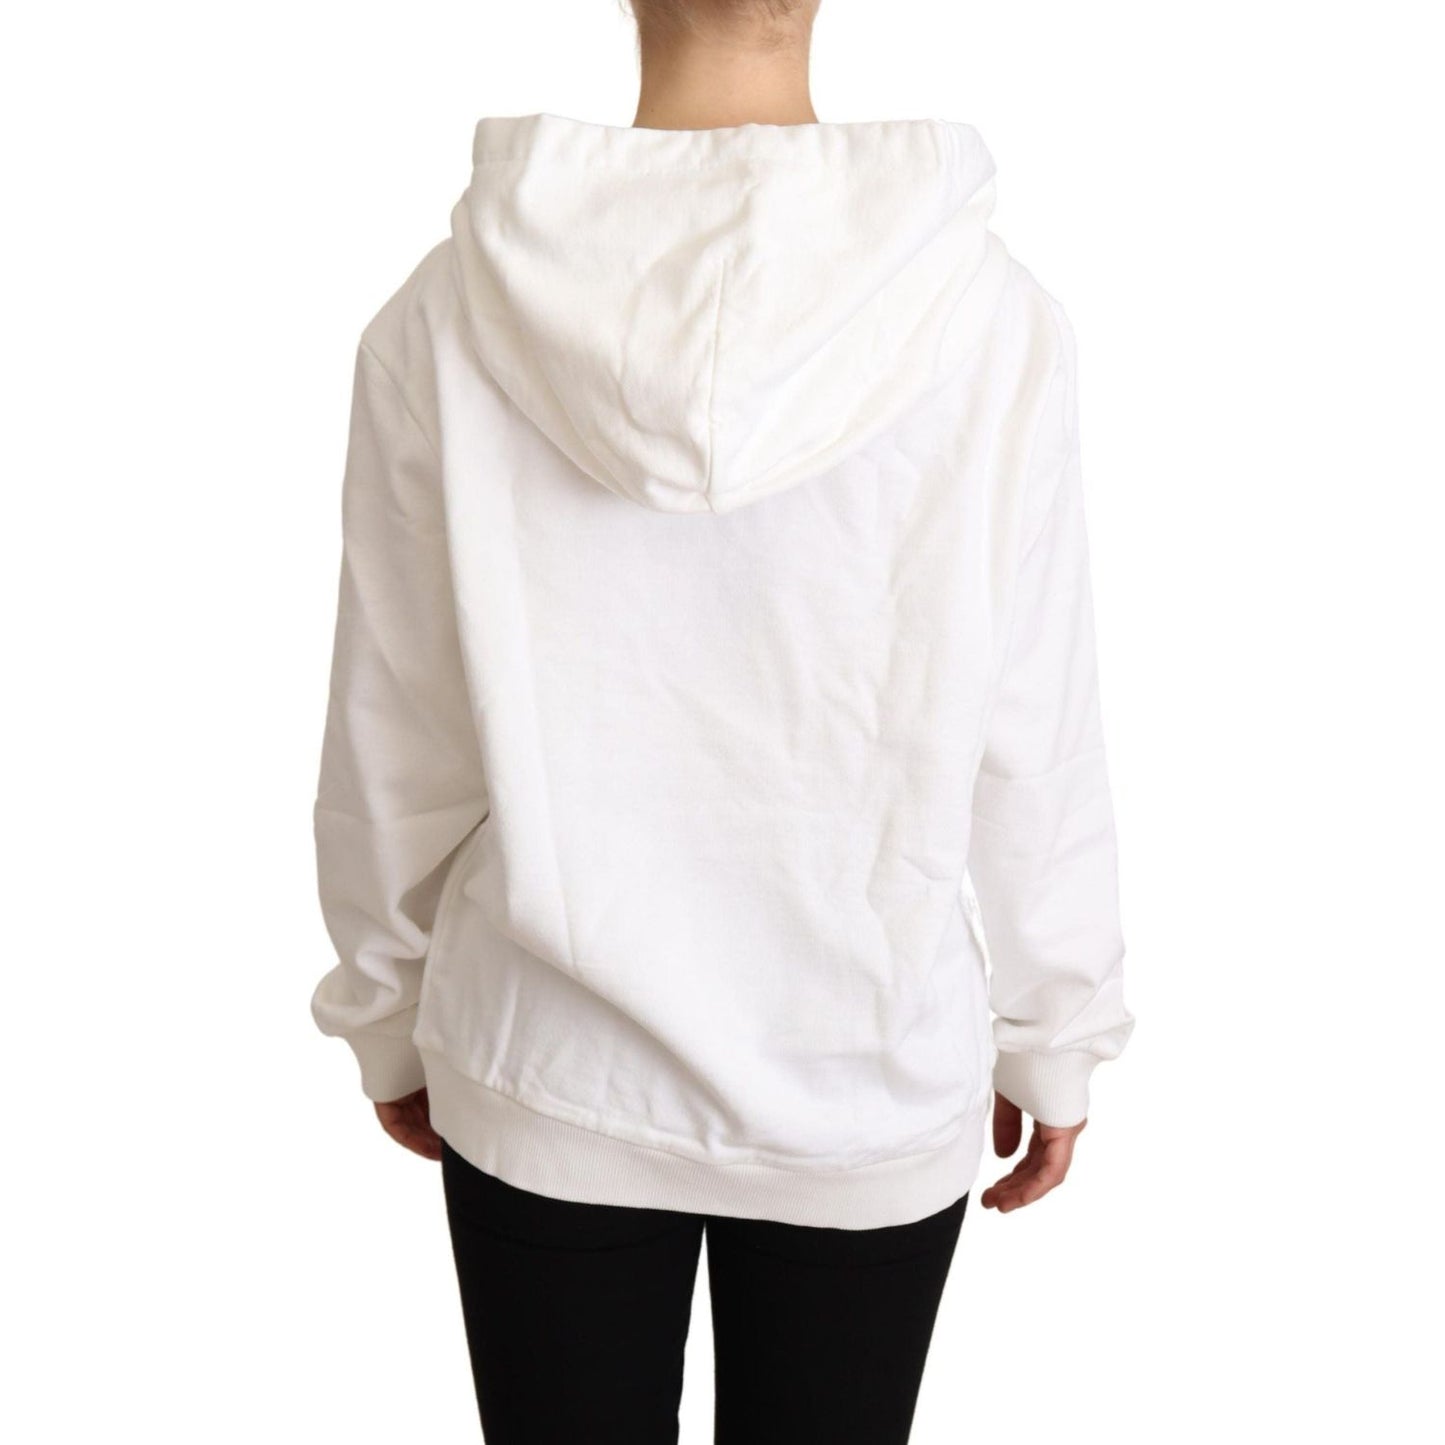 Dolce & Gabbana White L'Amore Motive Hooded Sweater white-lamore-hooded-pullover-sweater